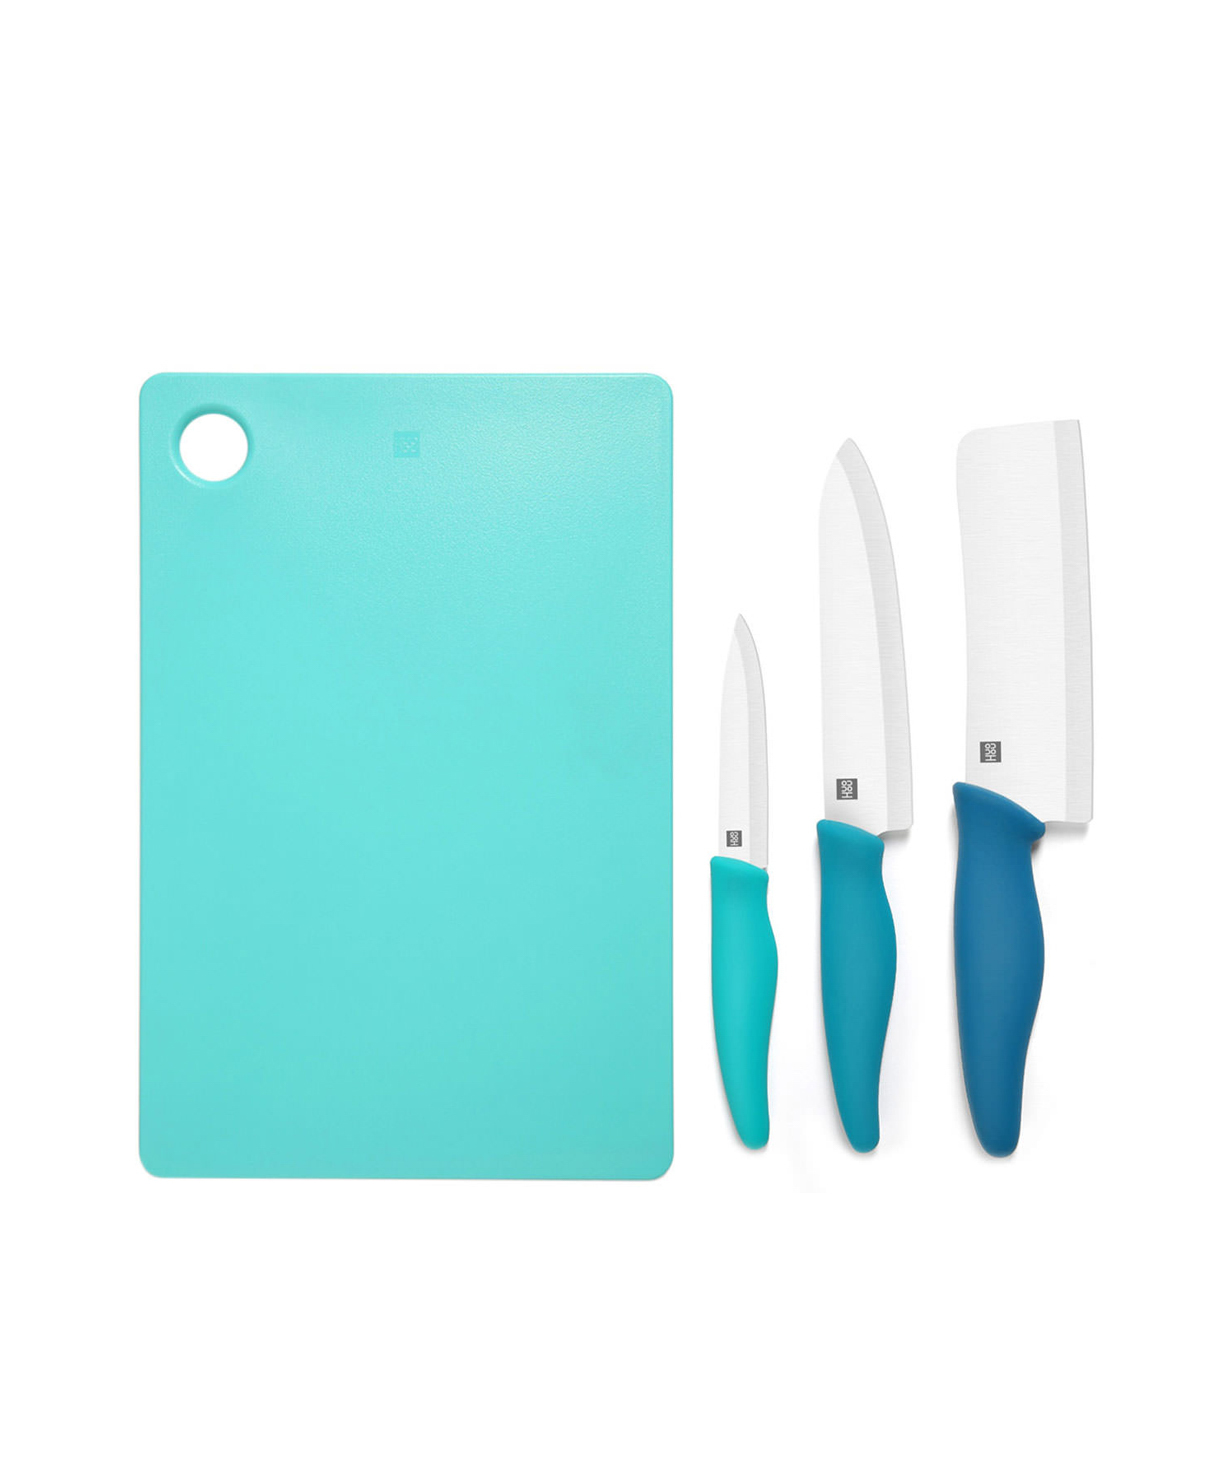 «Xiaomi HuoHou» Կերամիկական դանակների և կտրելու տախտակի հավաքածու